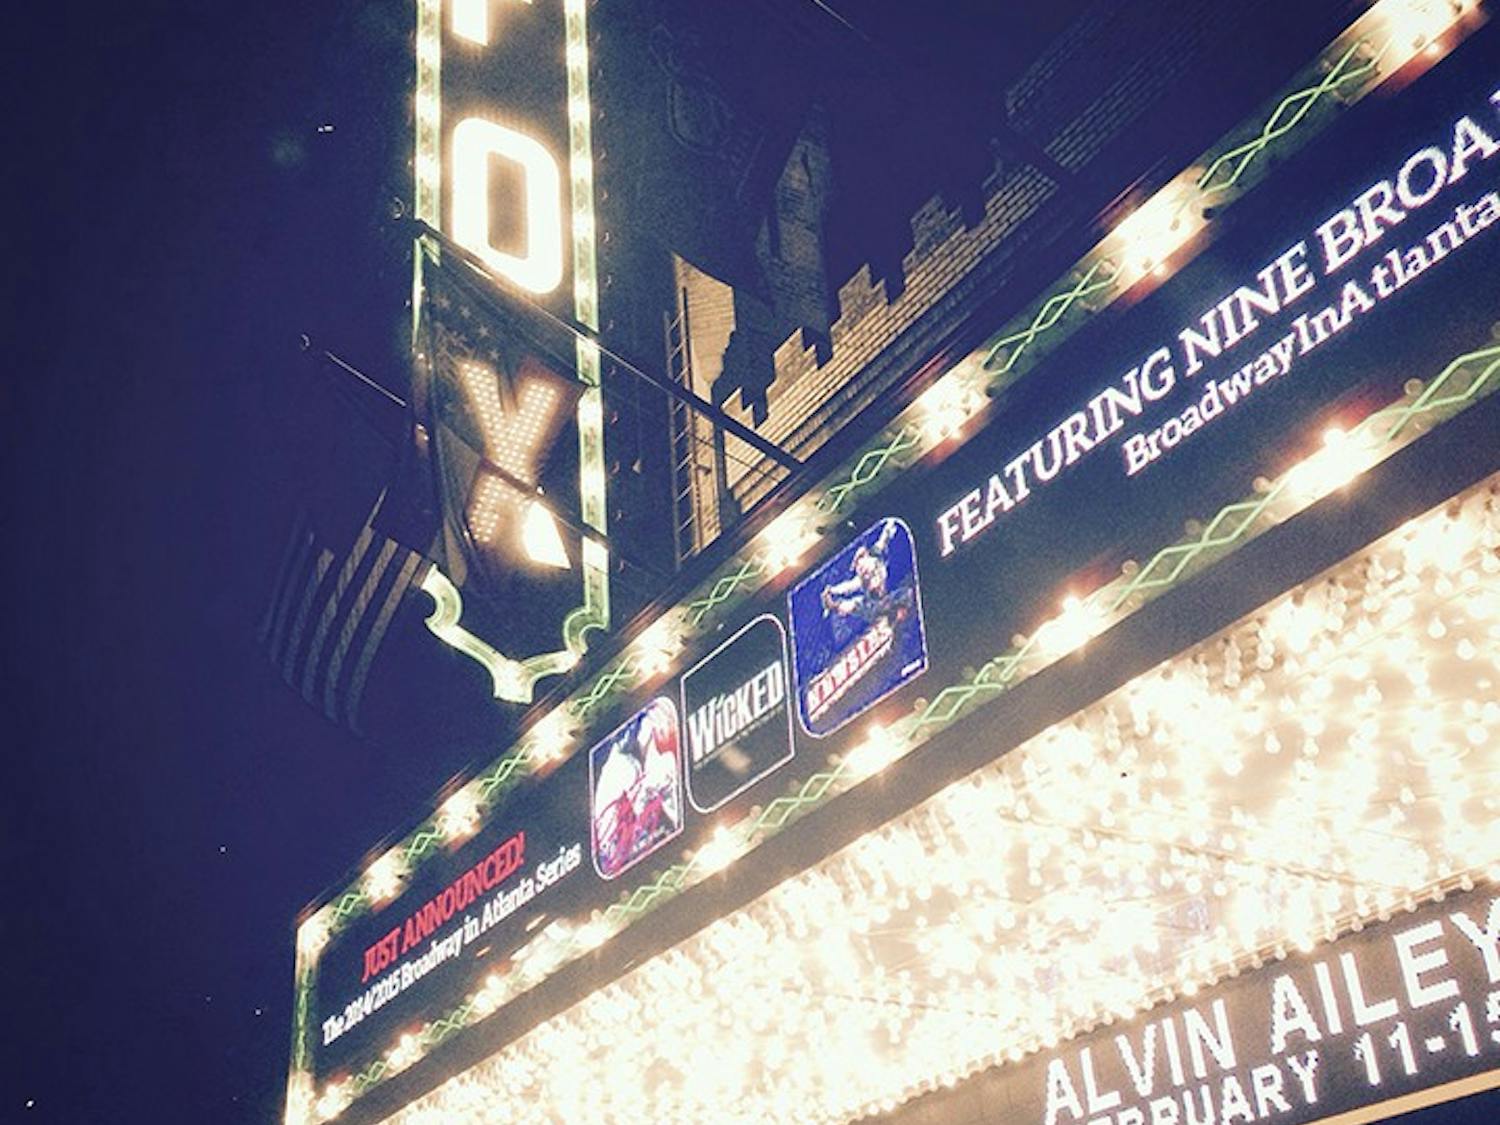 Fox Theater in Atlanta, Georgia showcasing The Nutcracker